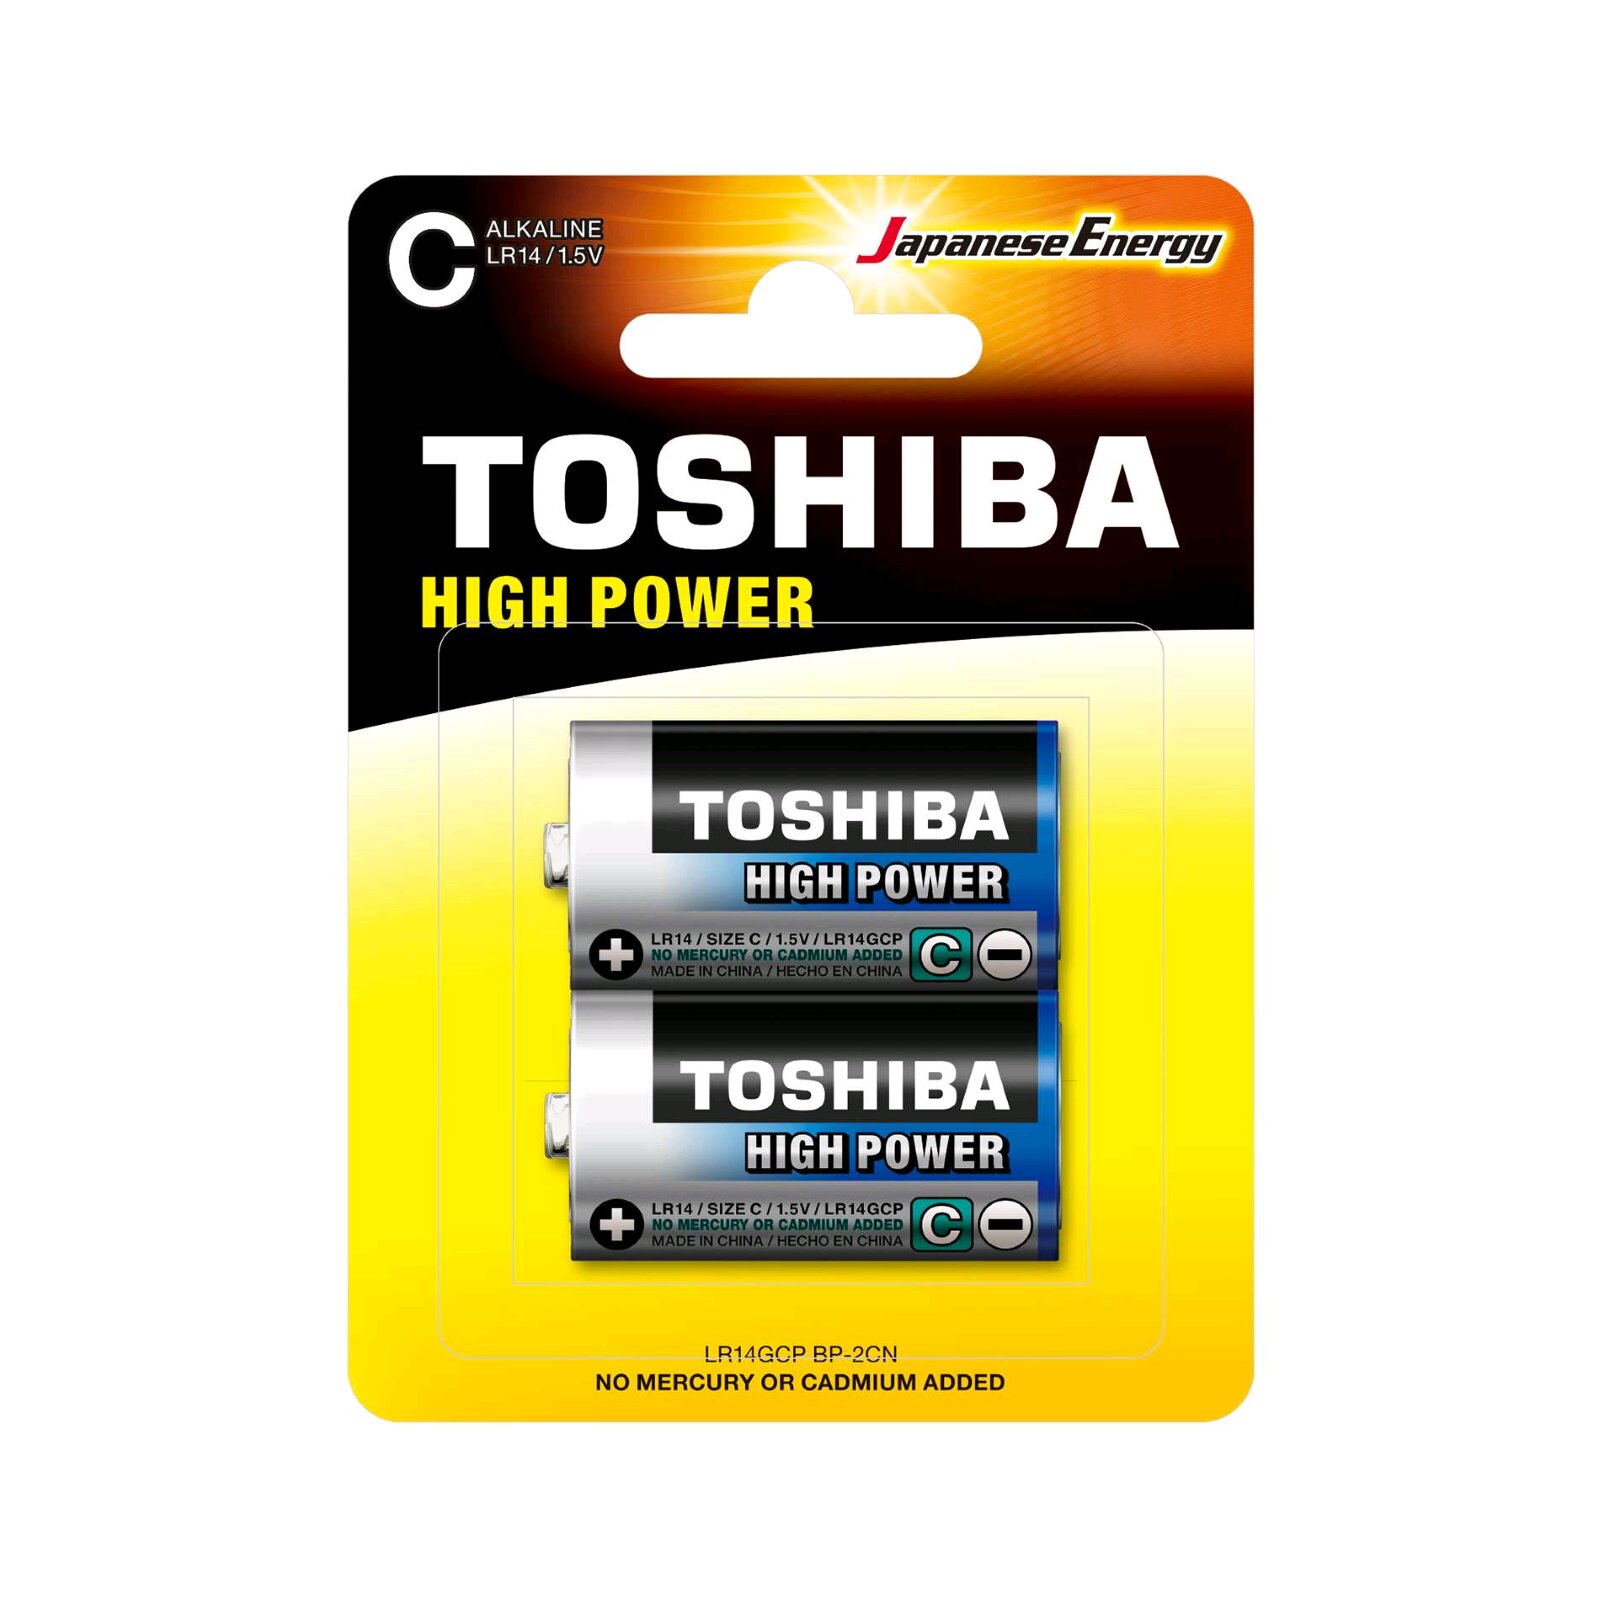 Toshiba High Power C - LR14GCP BP-2CN LR14 Batteries - Pack of 2 : photo 1